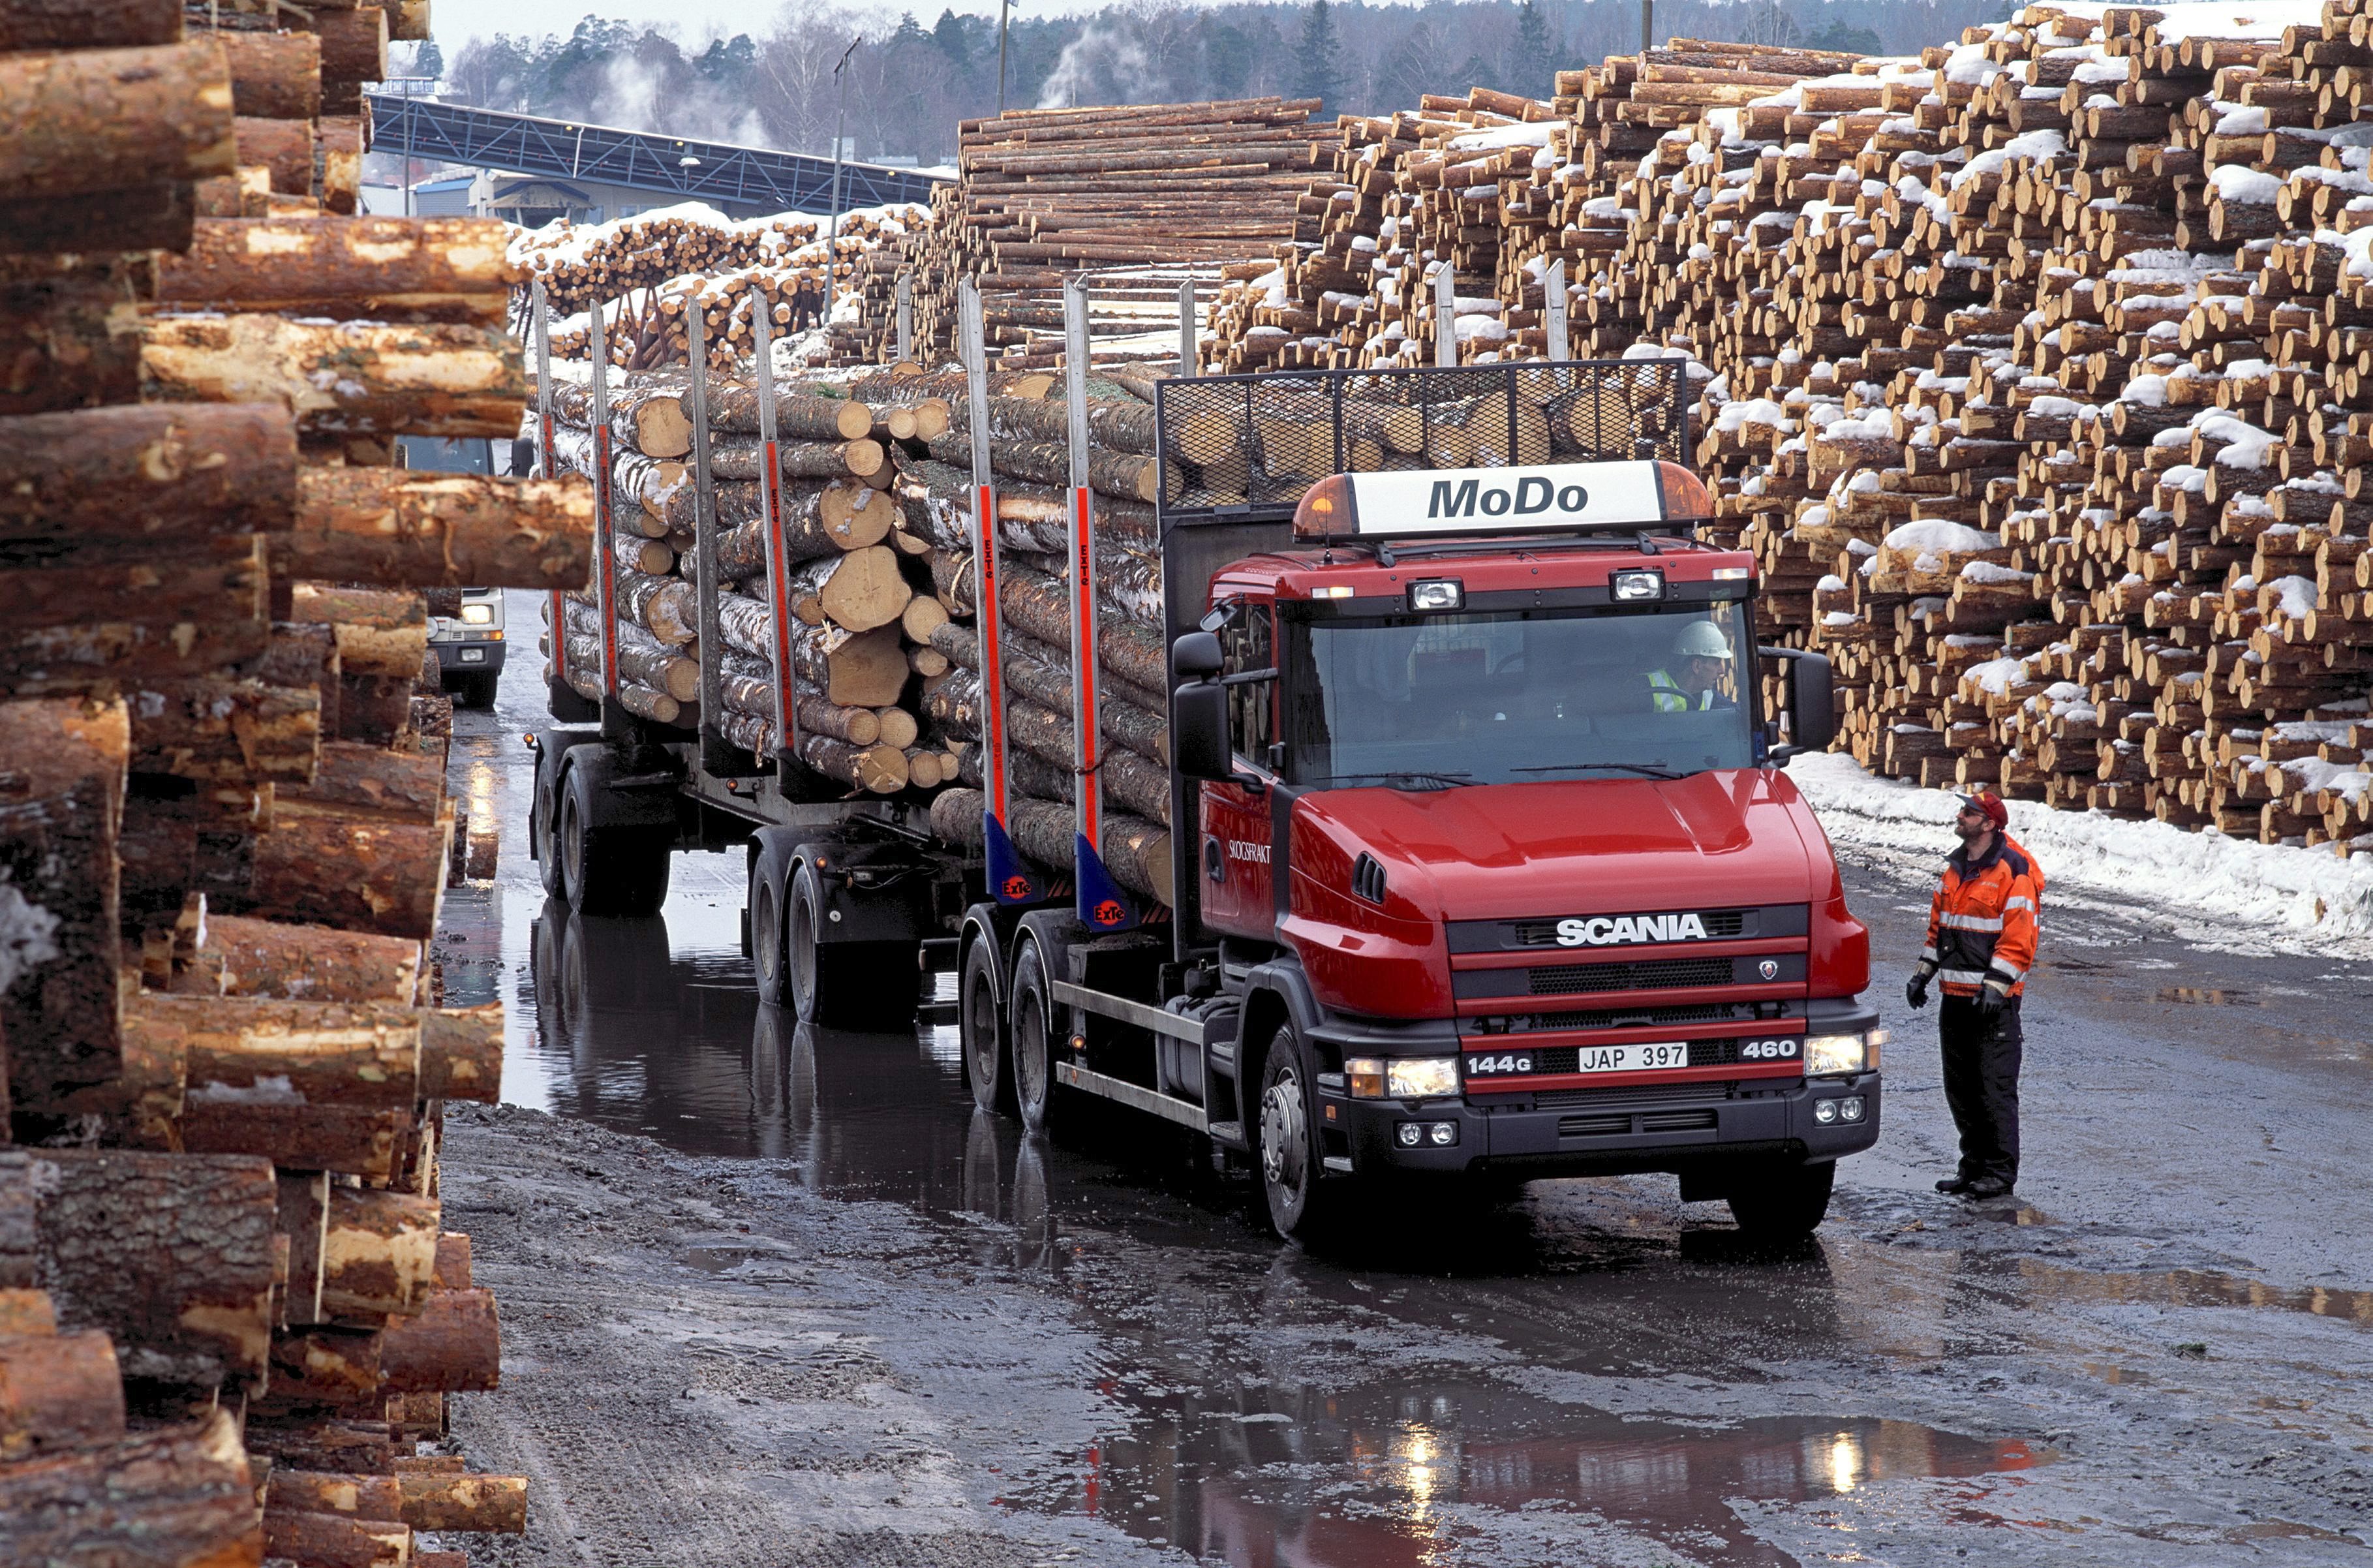 1995, Scania, T144g, 460, 6x4, Timber, Truck, Semi, Tractor Wallpaper